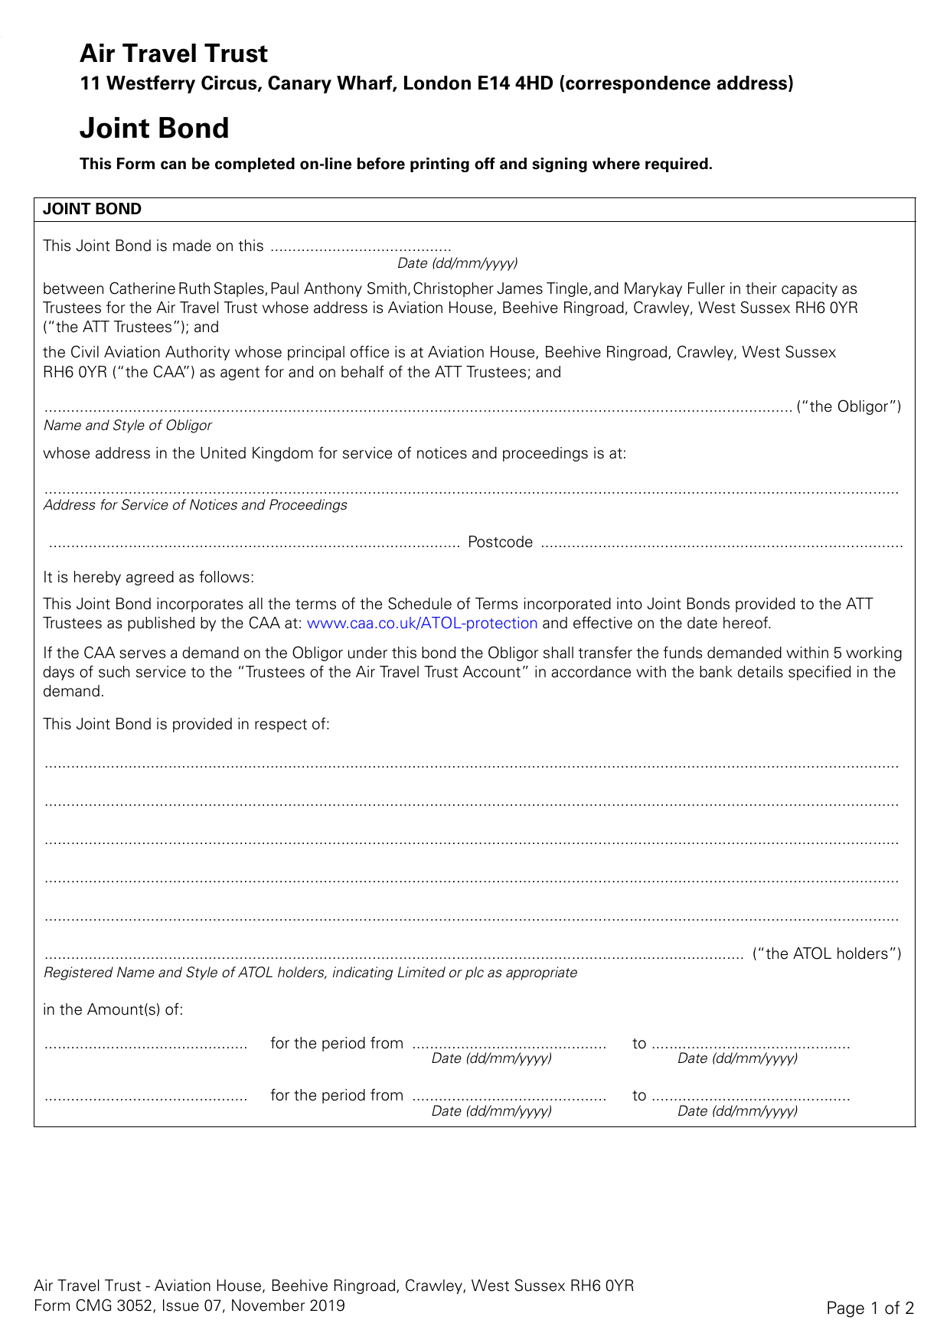 Form CMG3052 Joint Bond - United Kingdom, Page 1